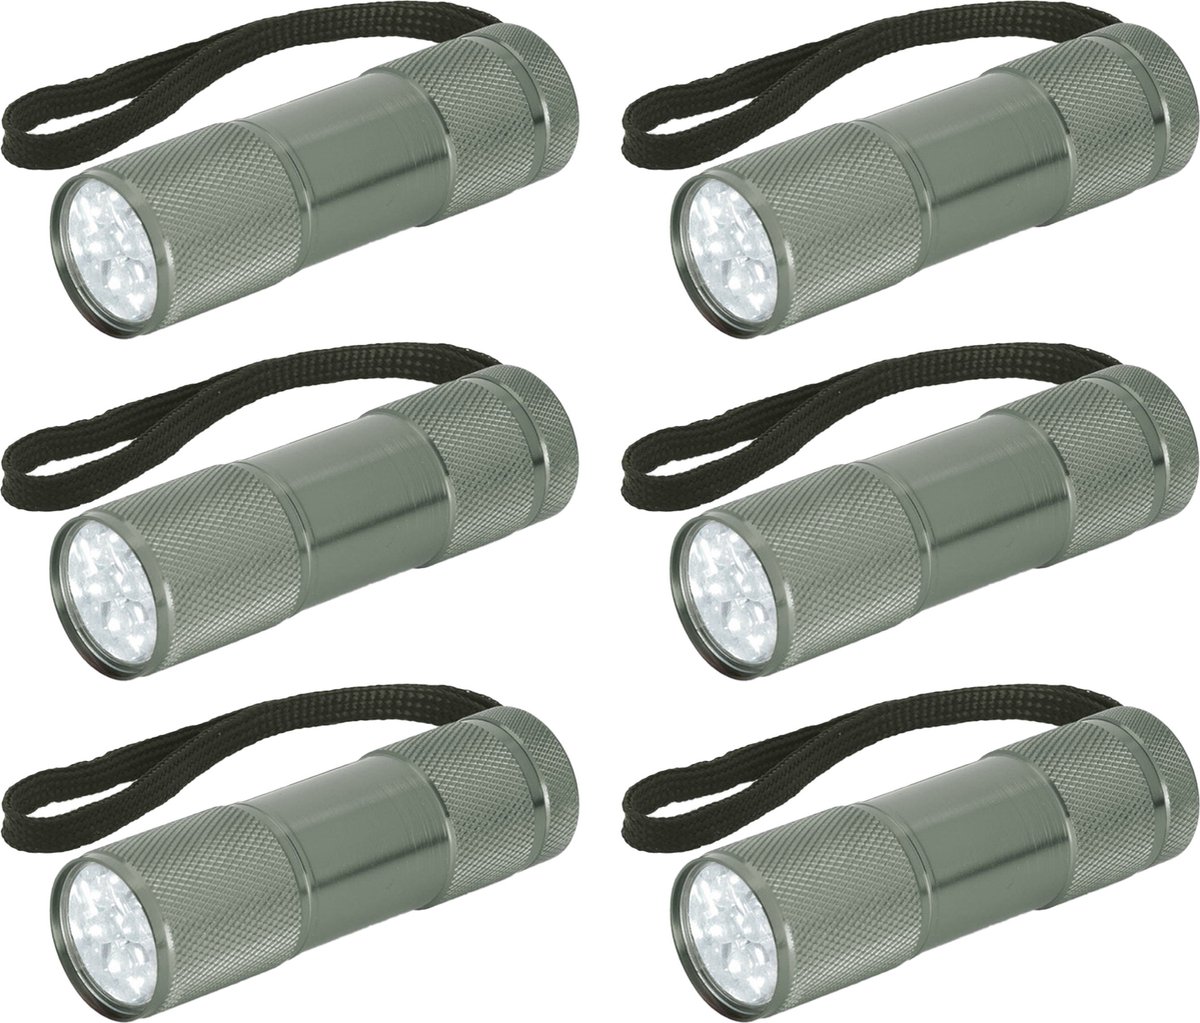 Compacte LED kinder zaklamp - 6x - aluminium - grijs - 9 cm - Uitdeelcadeau/leeslampje